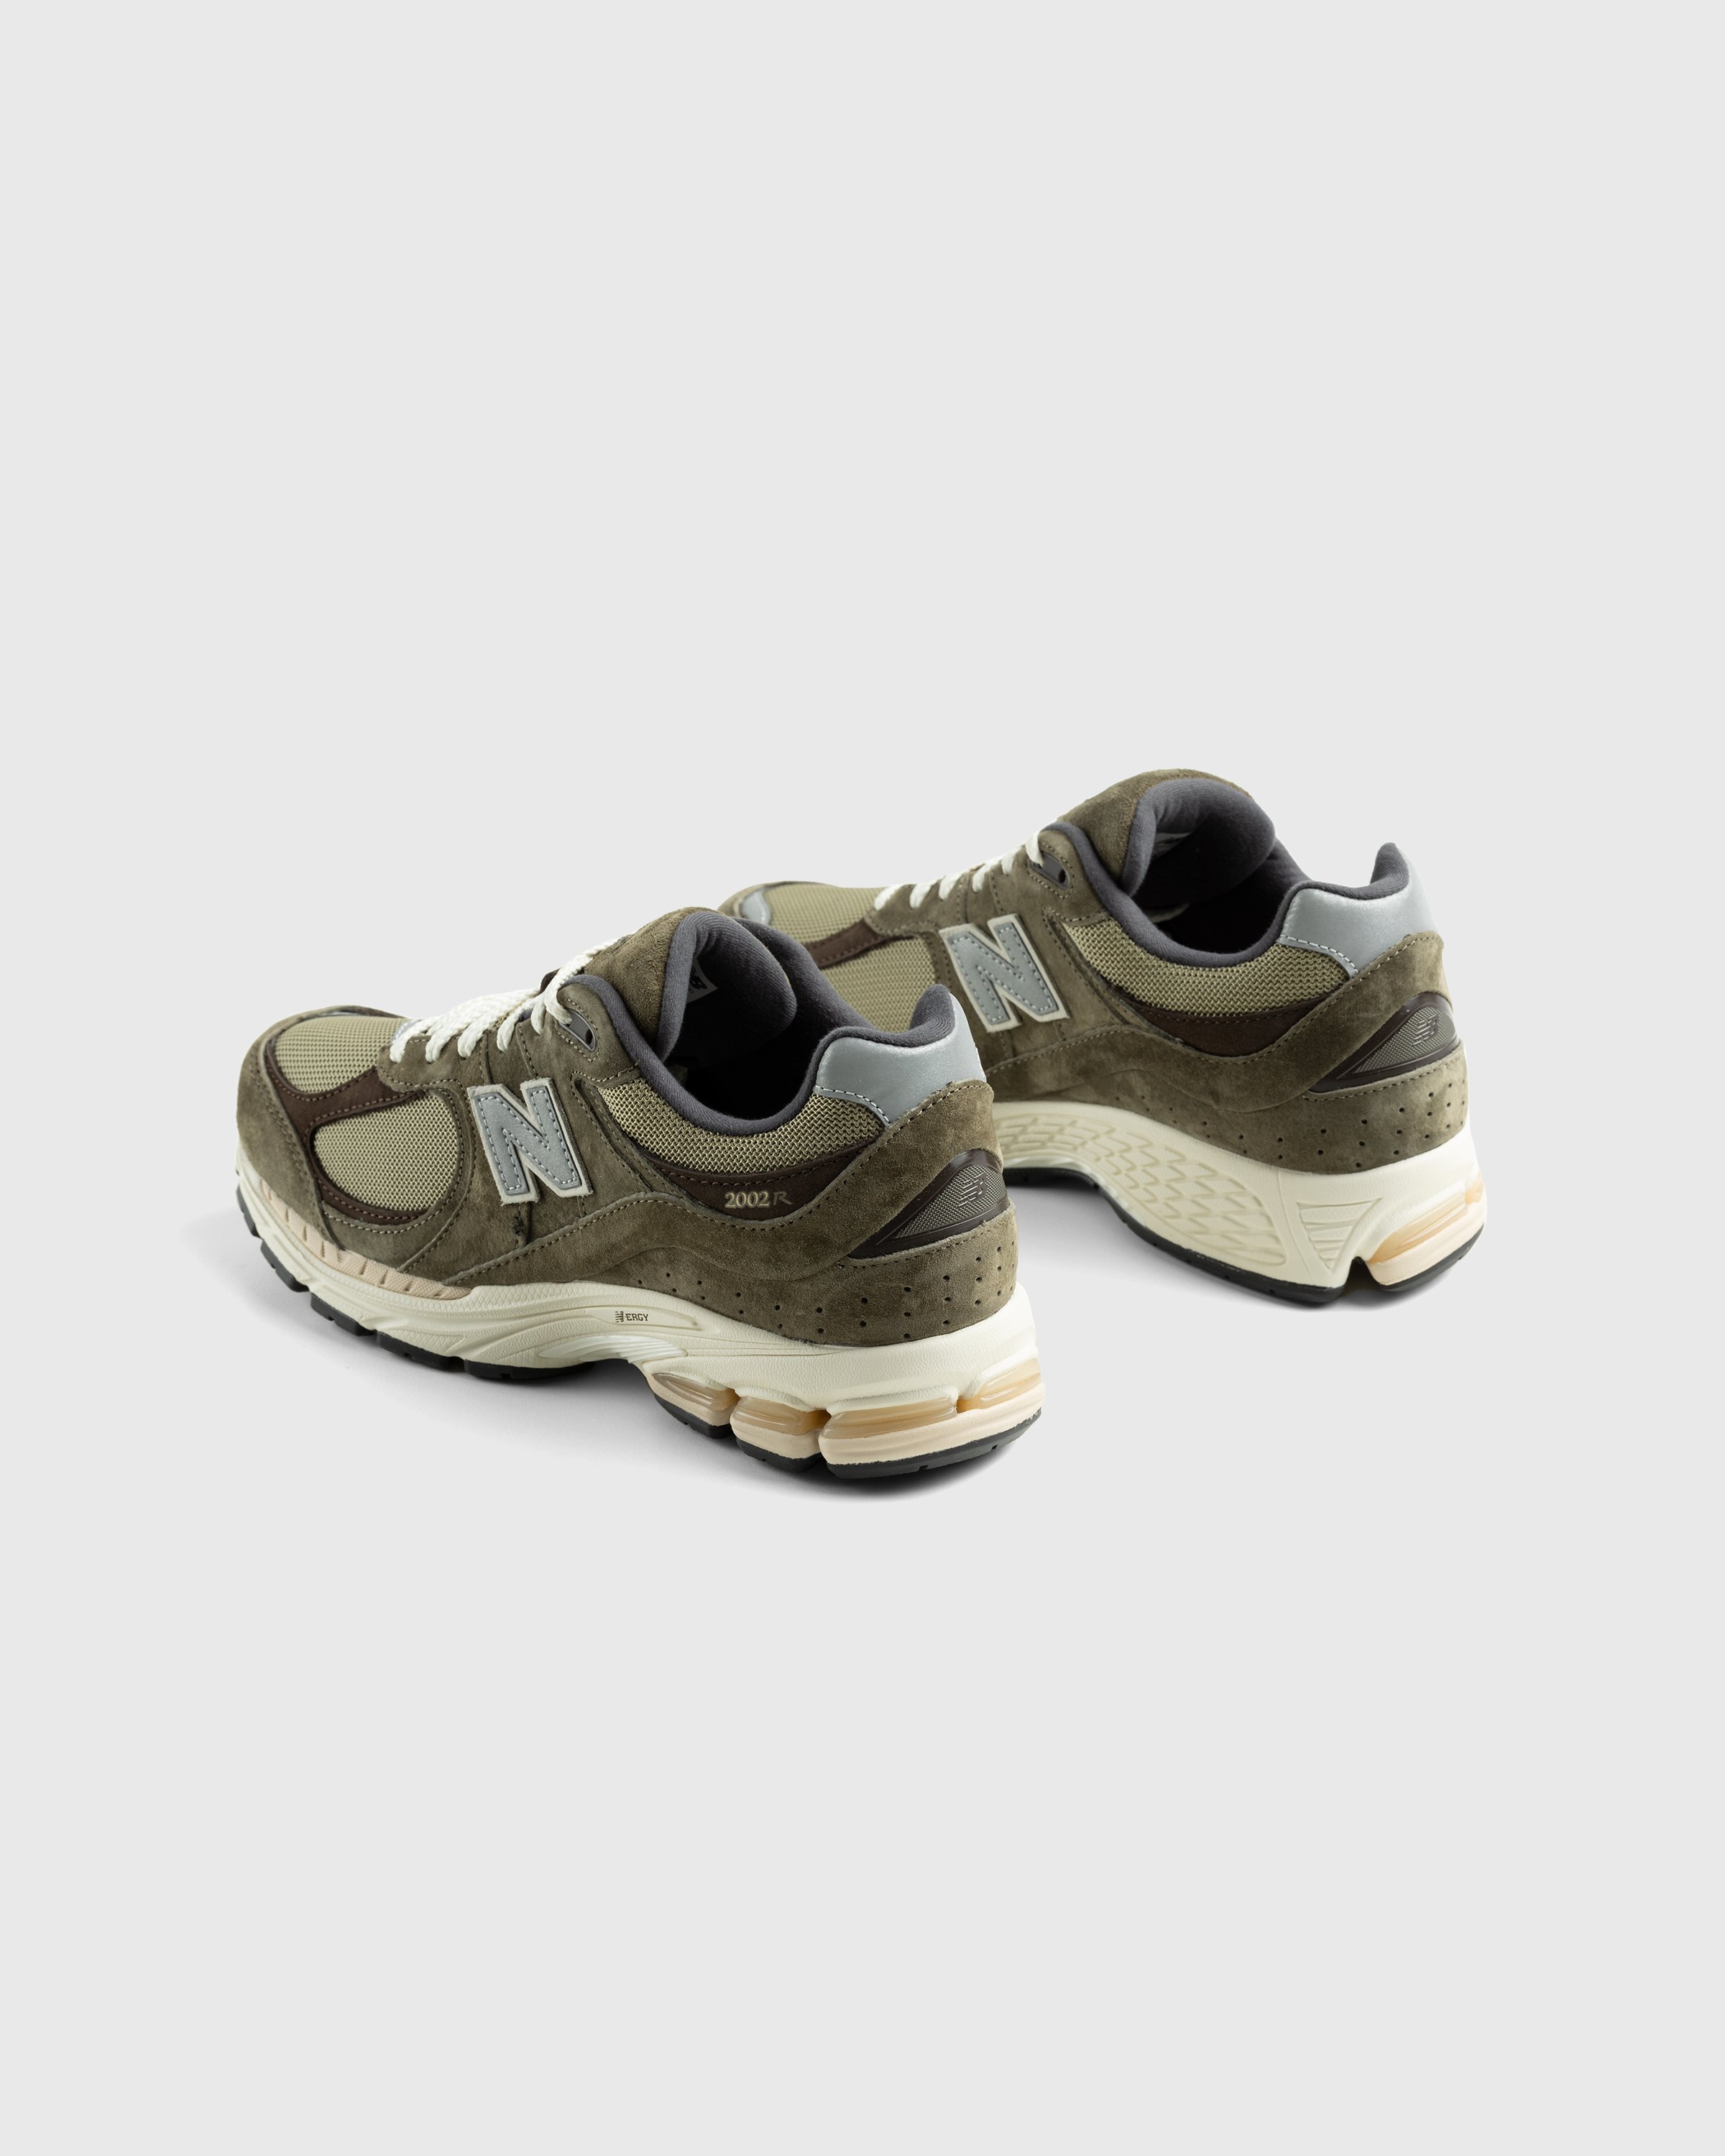 New Balance - M2002RHN Dark Camo - Footwear - Green - Image 4